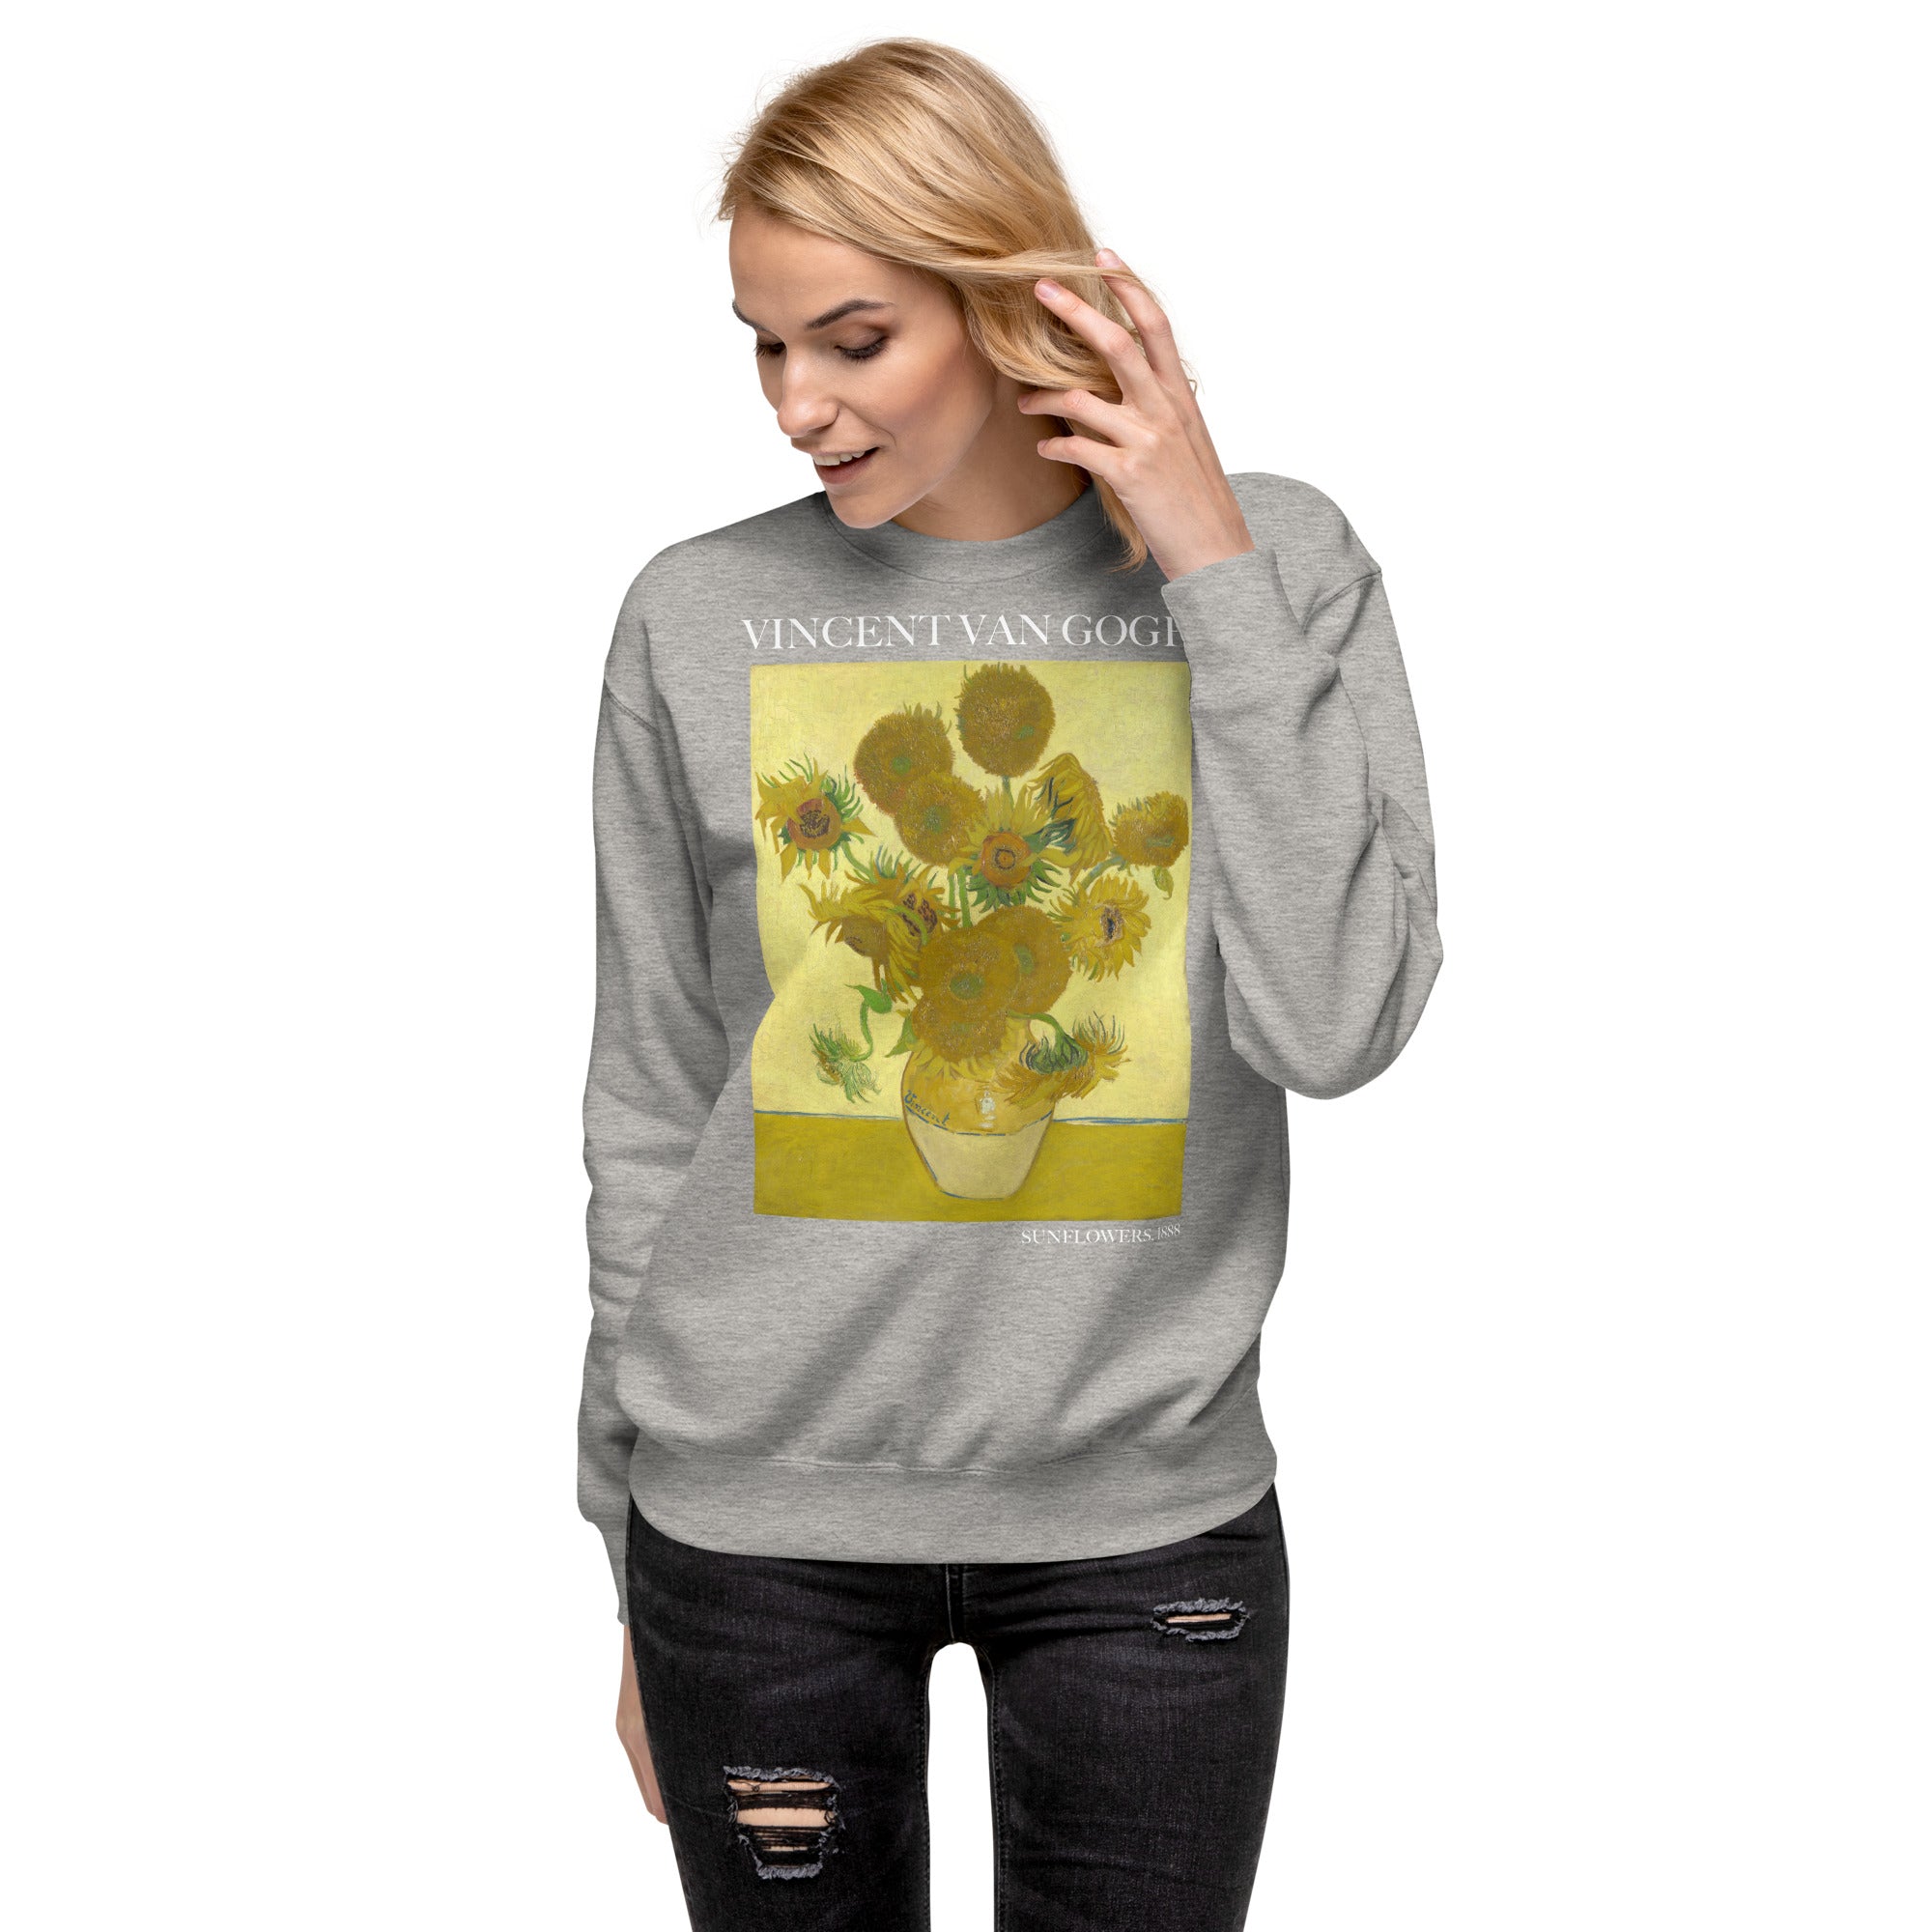 Vincent van Gogh 'Sunflowers' Famous Painting Sweatshirt | Unisex Premium Sweatshirt